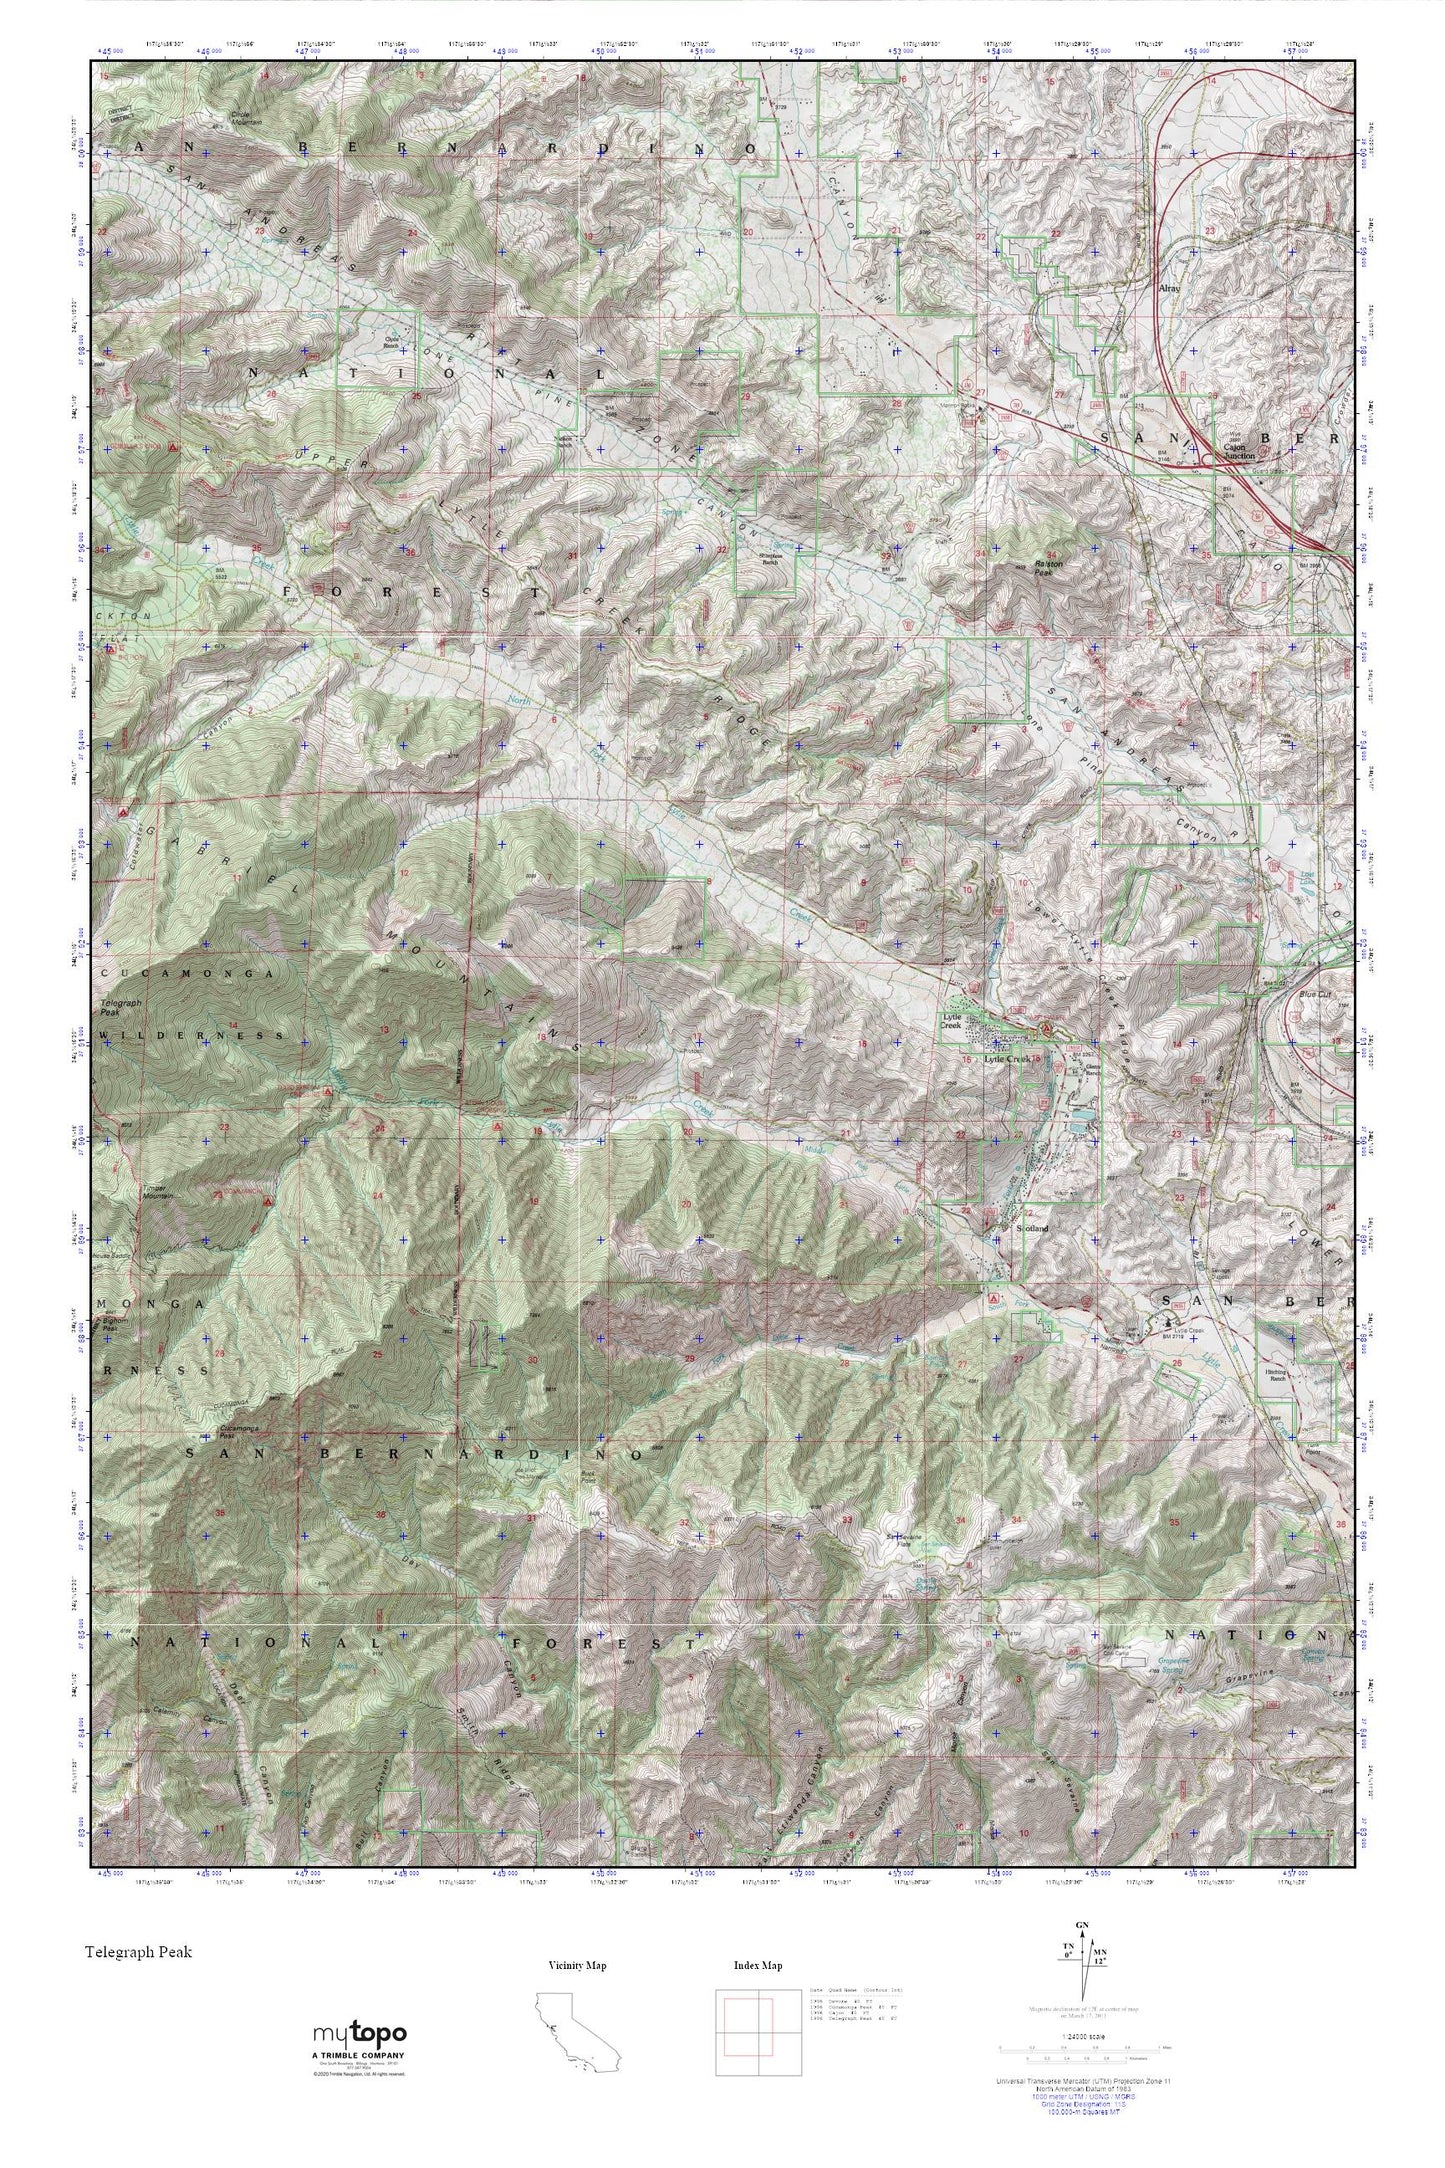 Lytle Creek MyTopo Explorer Series Map Image